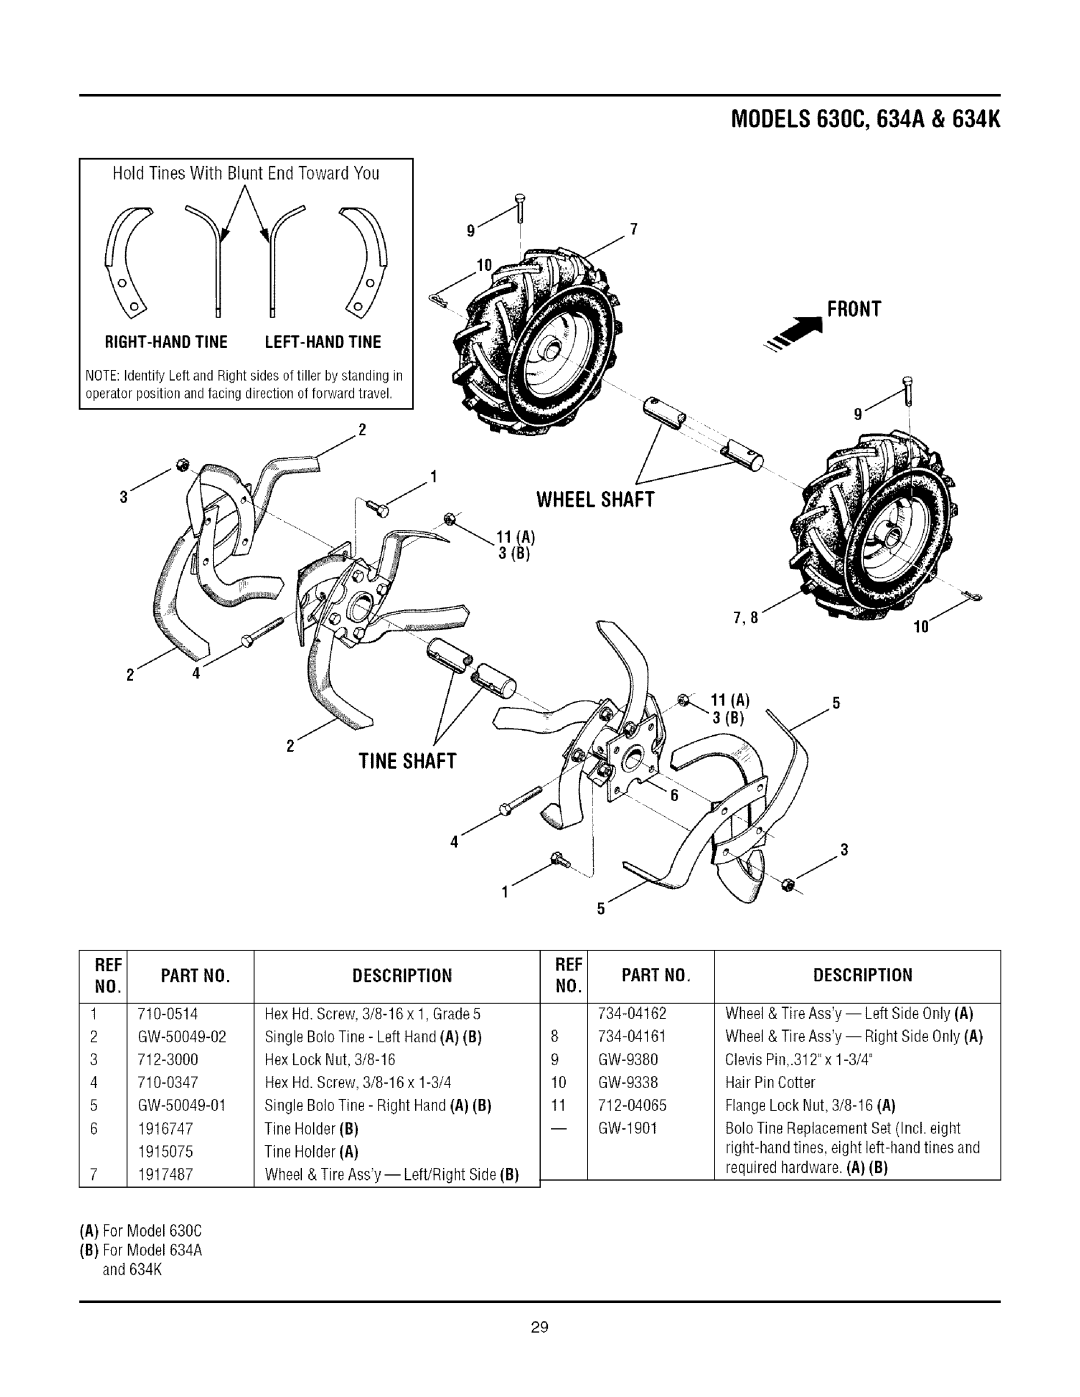 Troy-Bilt manual Wheelshaft, Tine Shaft, MODELS630C, 634A & 634K, Front, Description, Partno 